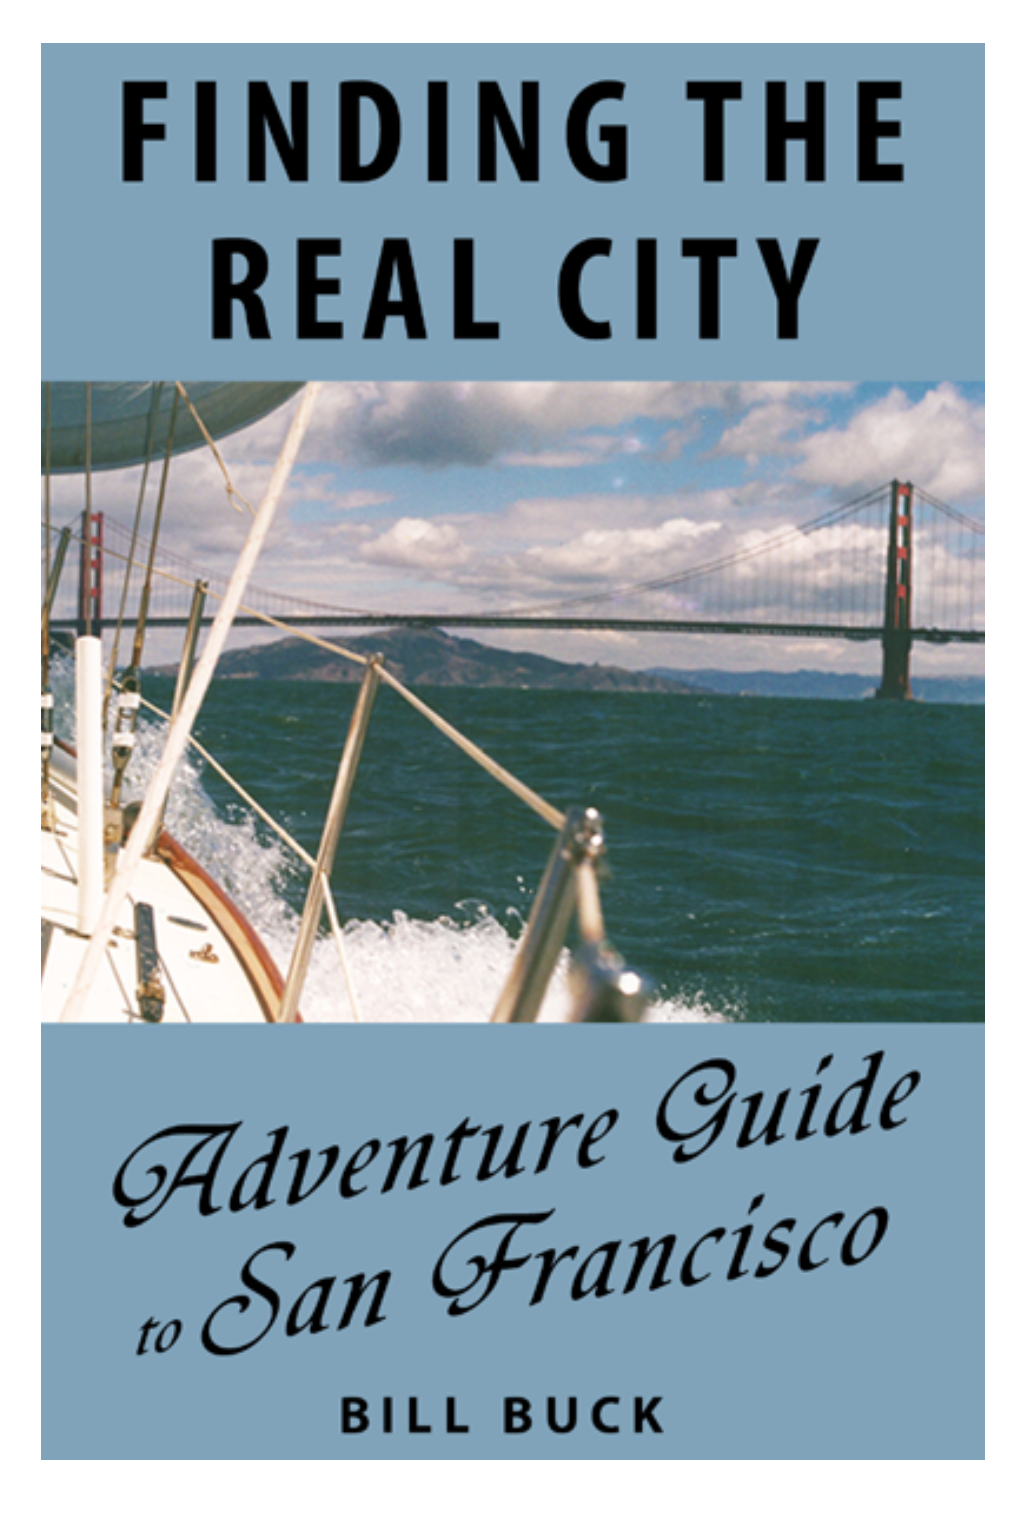 Adventure Guide to San Francisco BILL BUCK